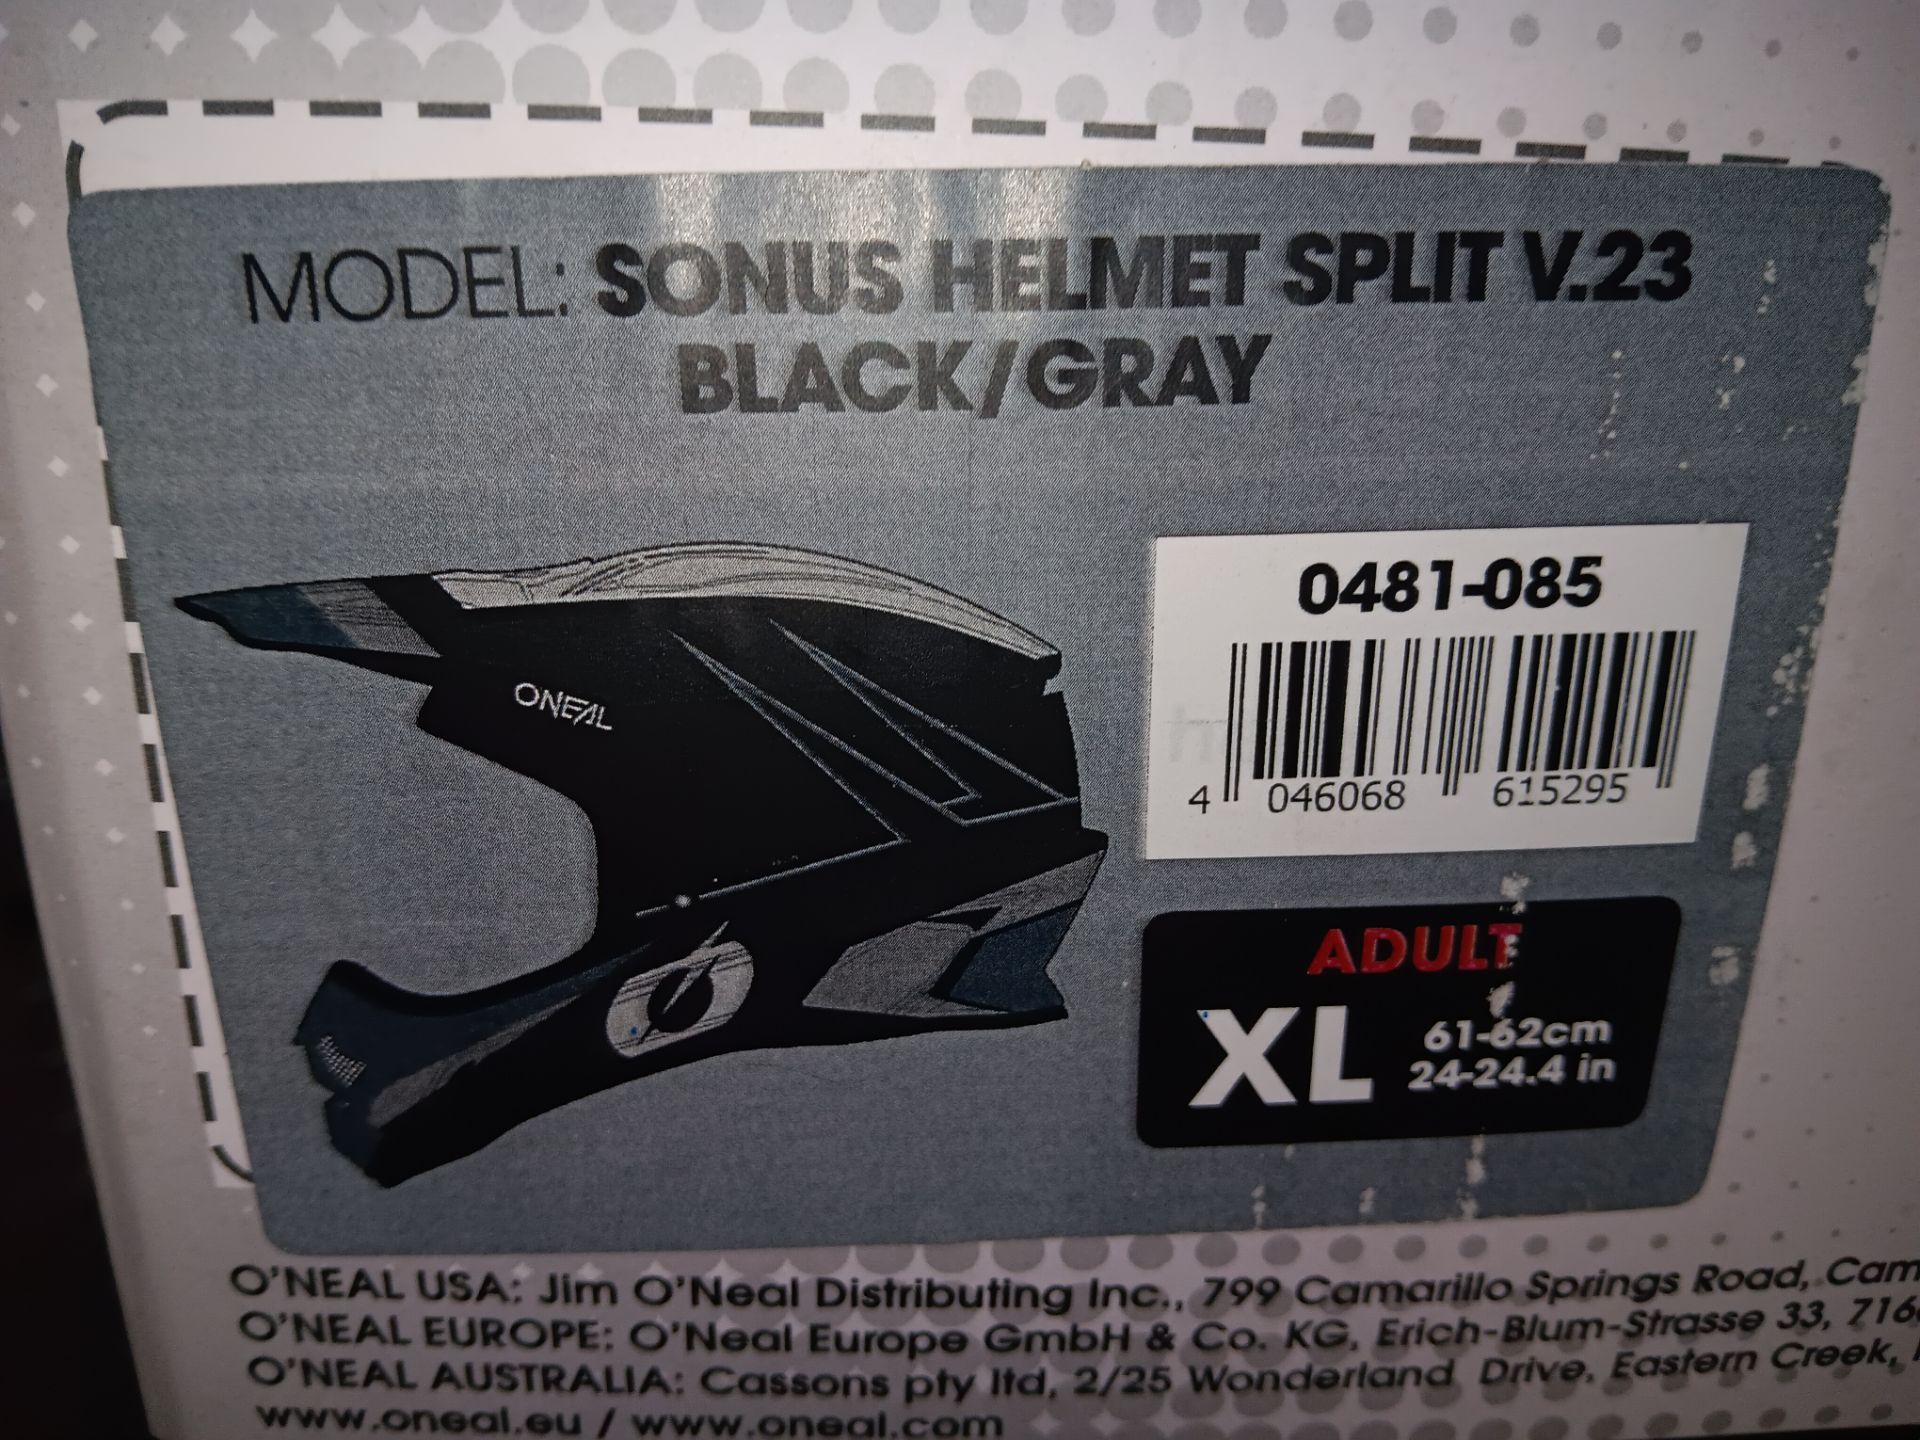 O'Neal Sonus Helmet, Split V.23 Black / Grey (Adult XL), Boxed - Image 2 of 2